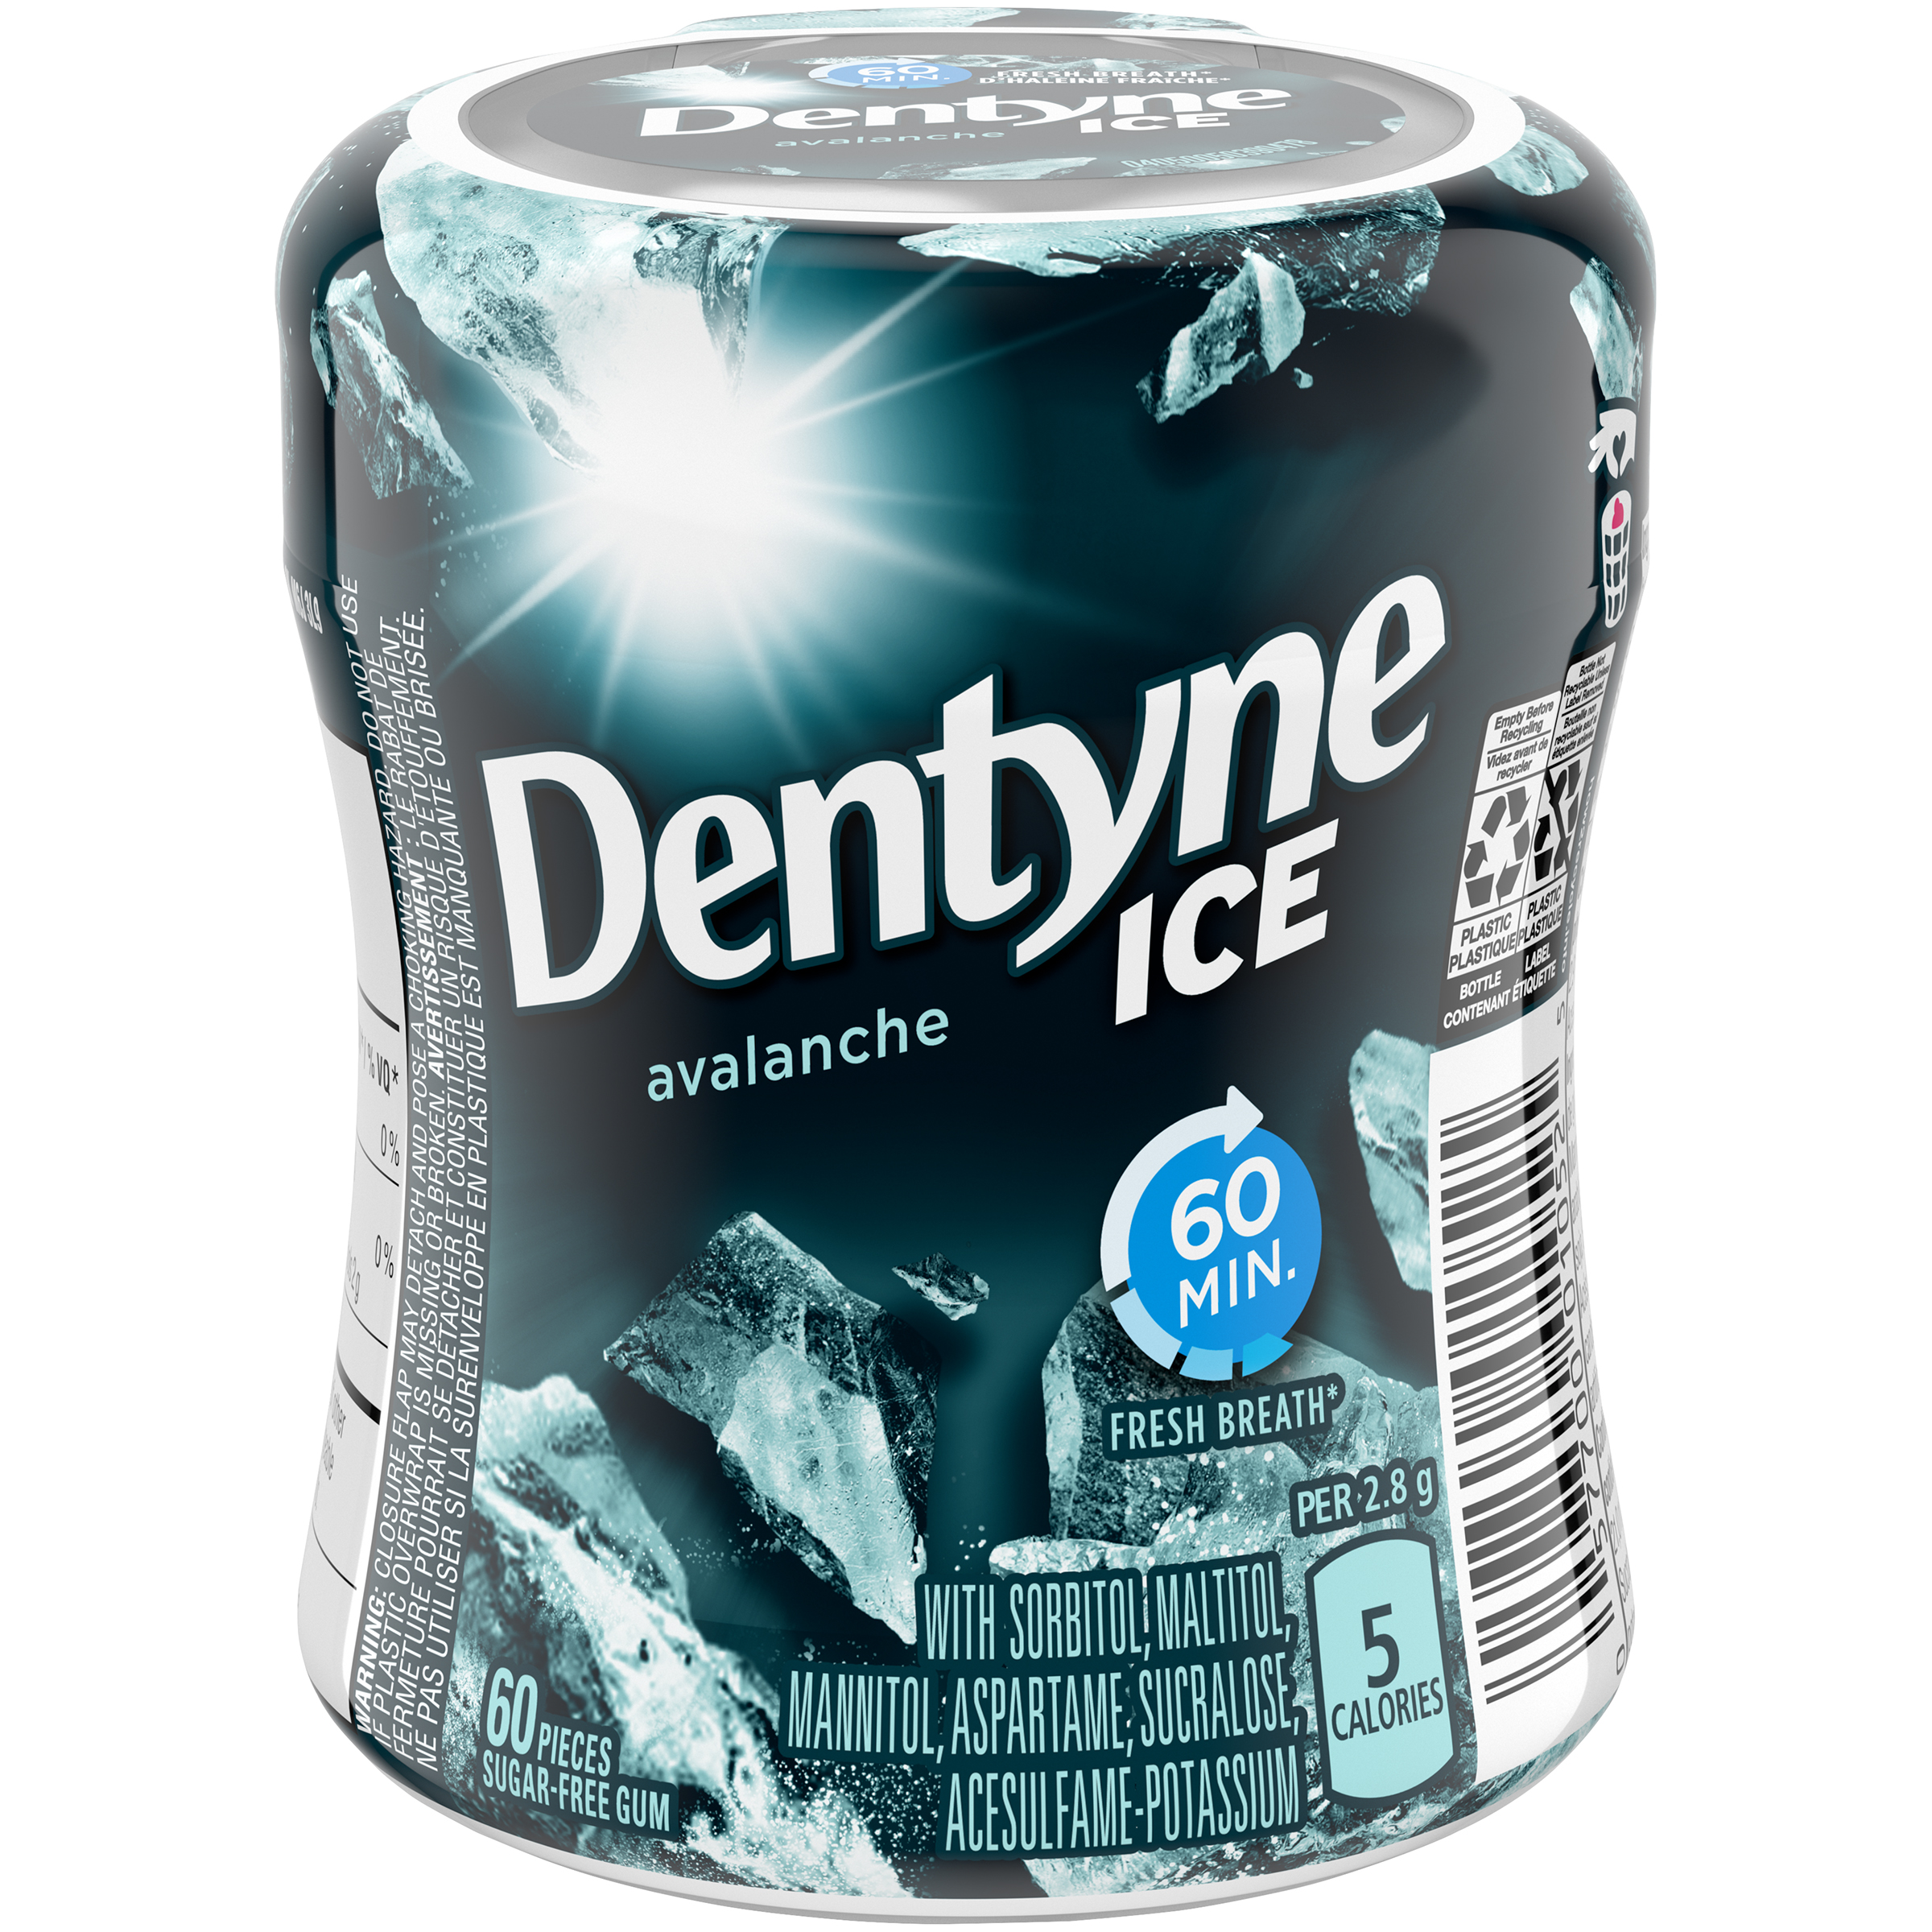 Dentyne Ice Avalanche Mint Gum 60 Count